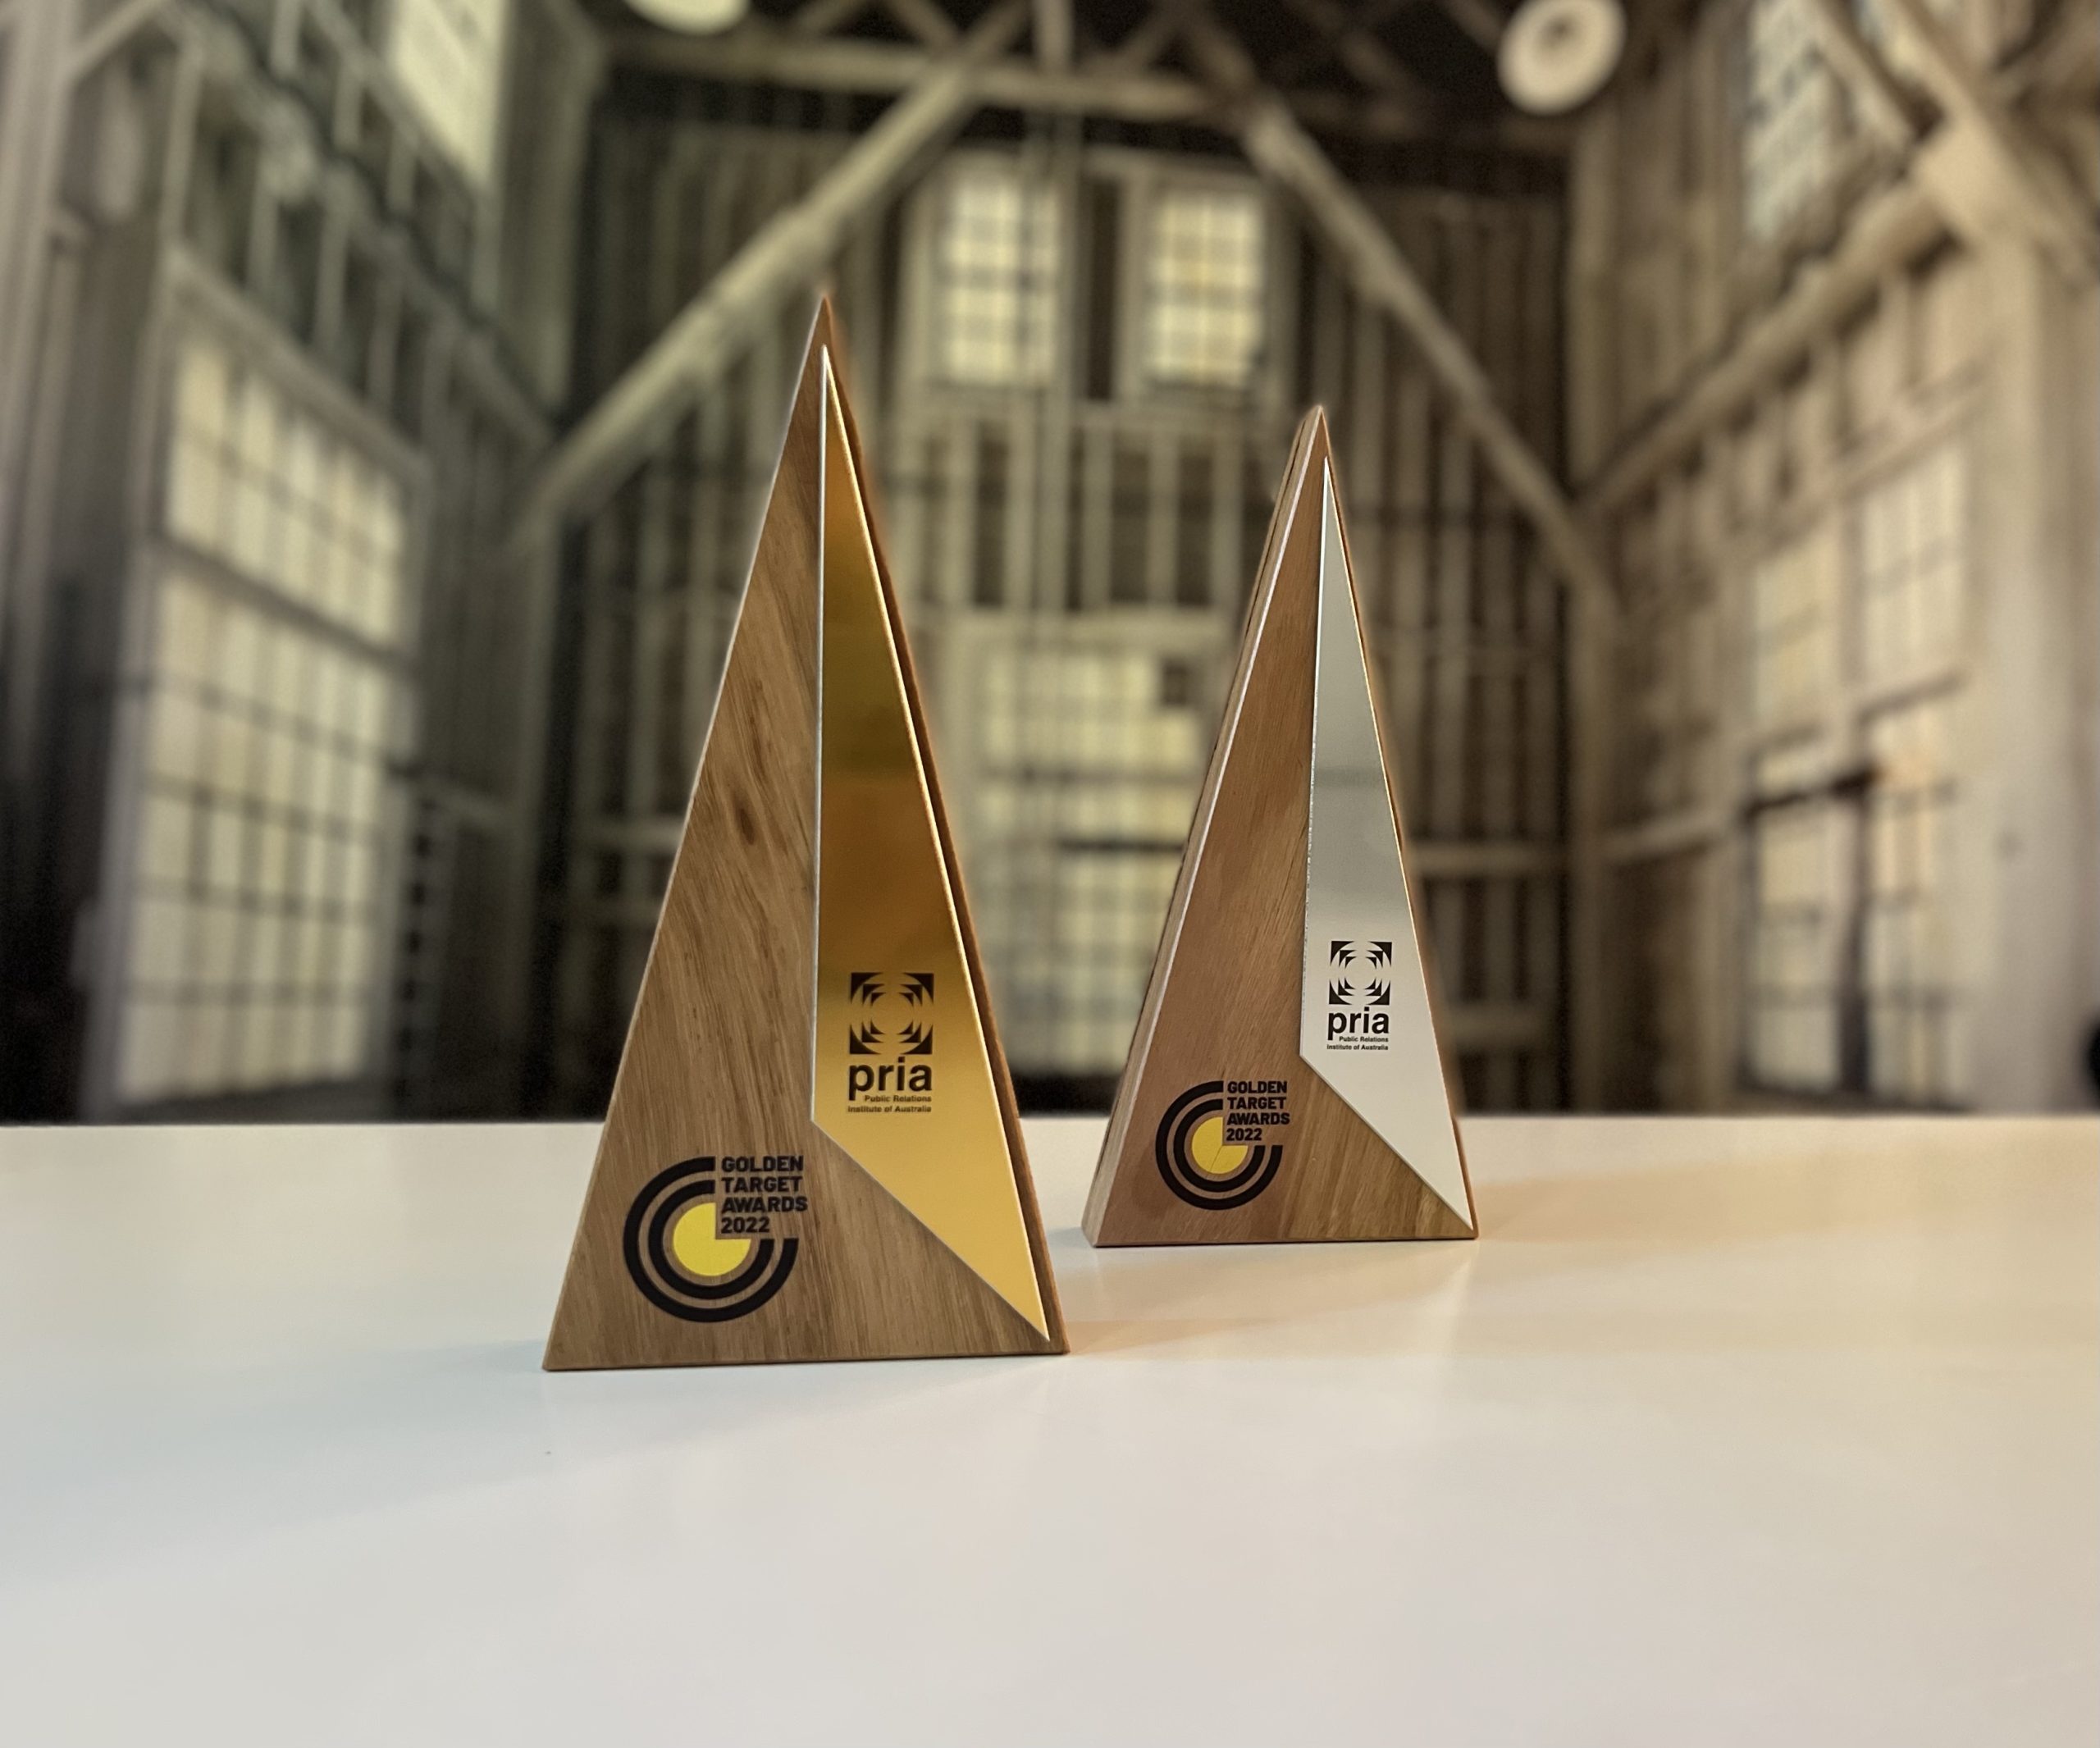 Primary celebrates two PRIA Golden Target awards